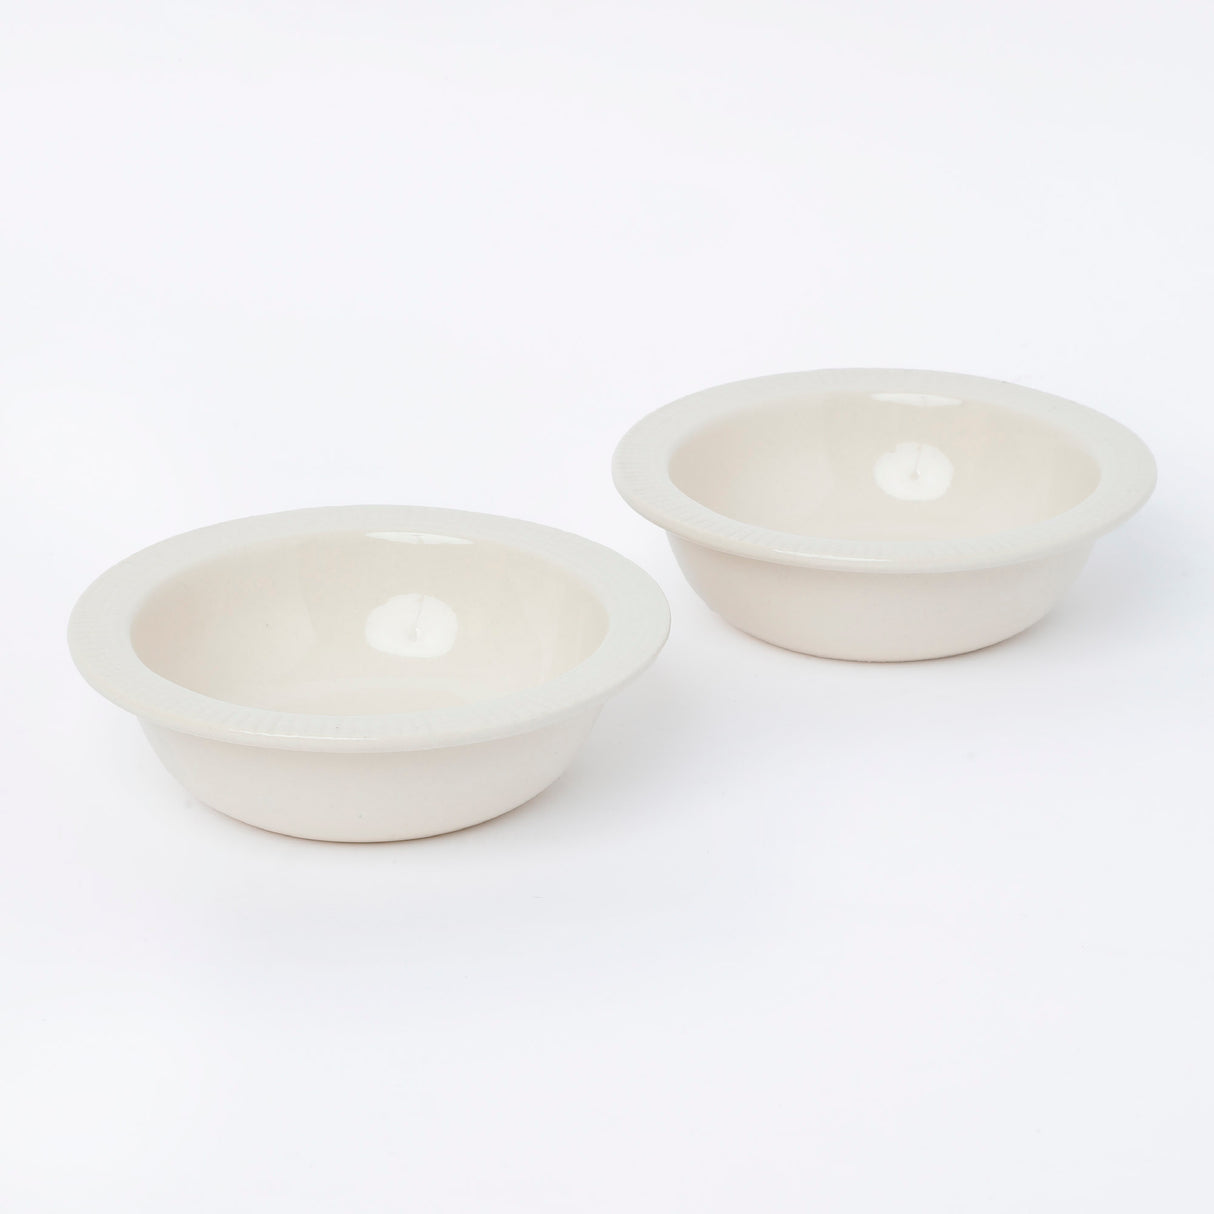 Plain white ceramic bowl